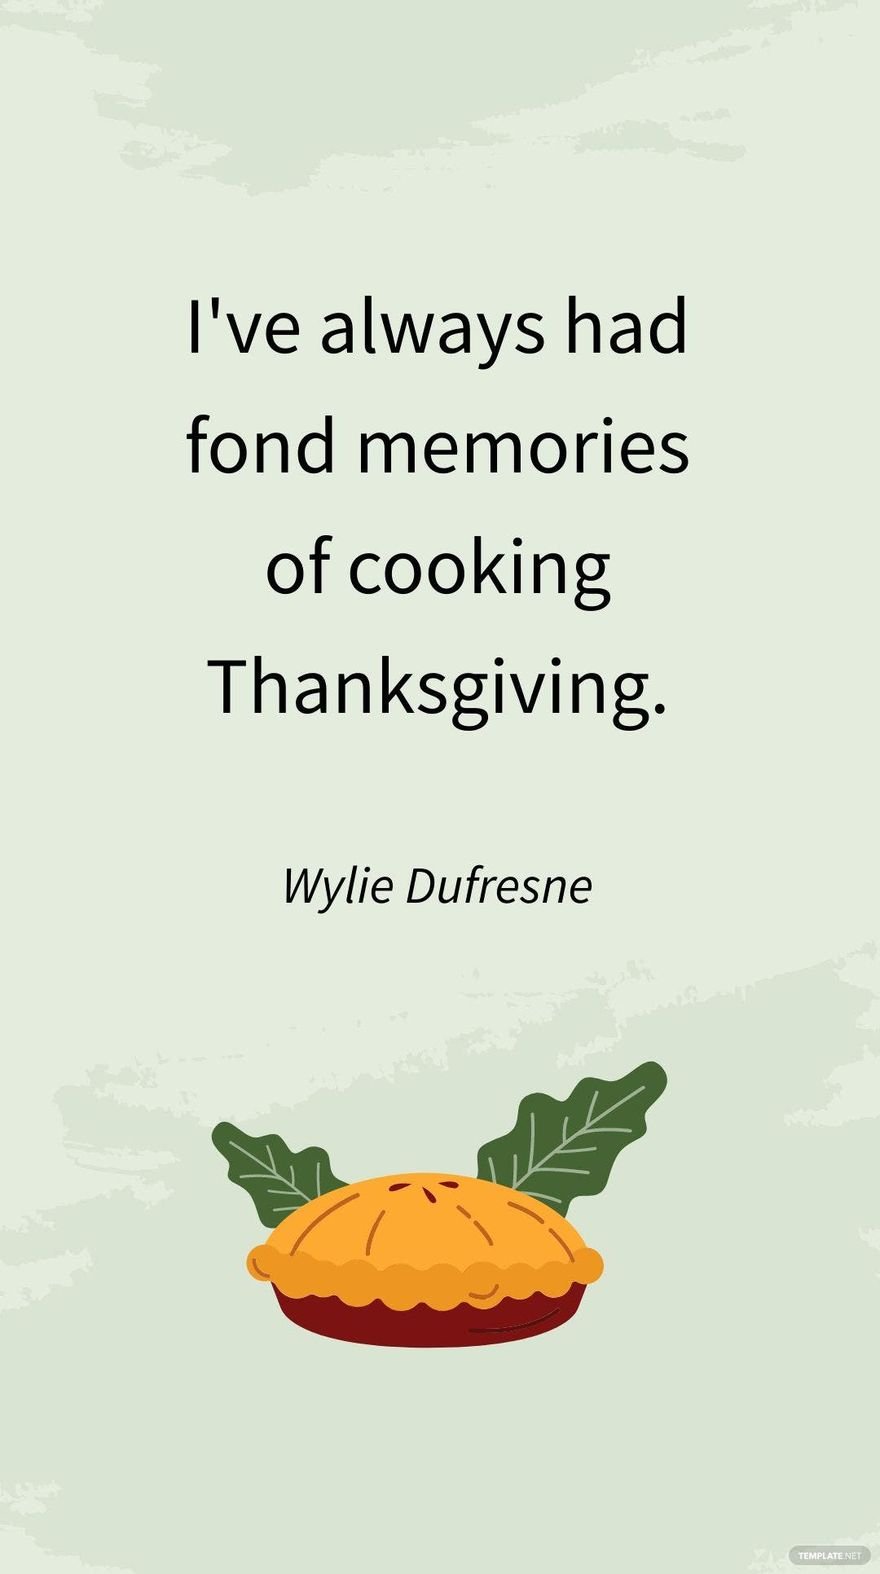 Free Wylie Dufresne - I've always had fond memories of cooking Thanksgiving. in JPG